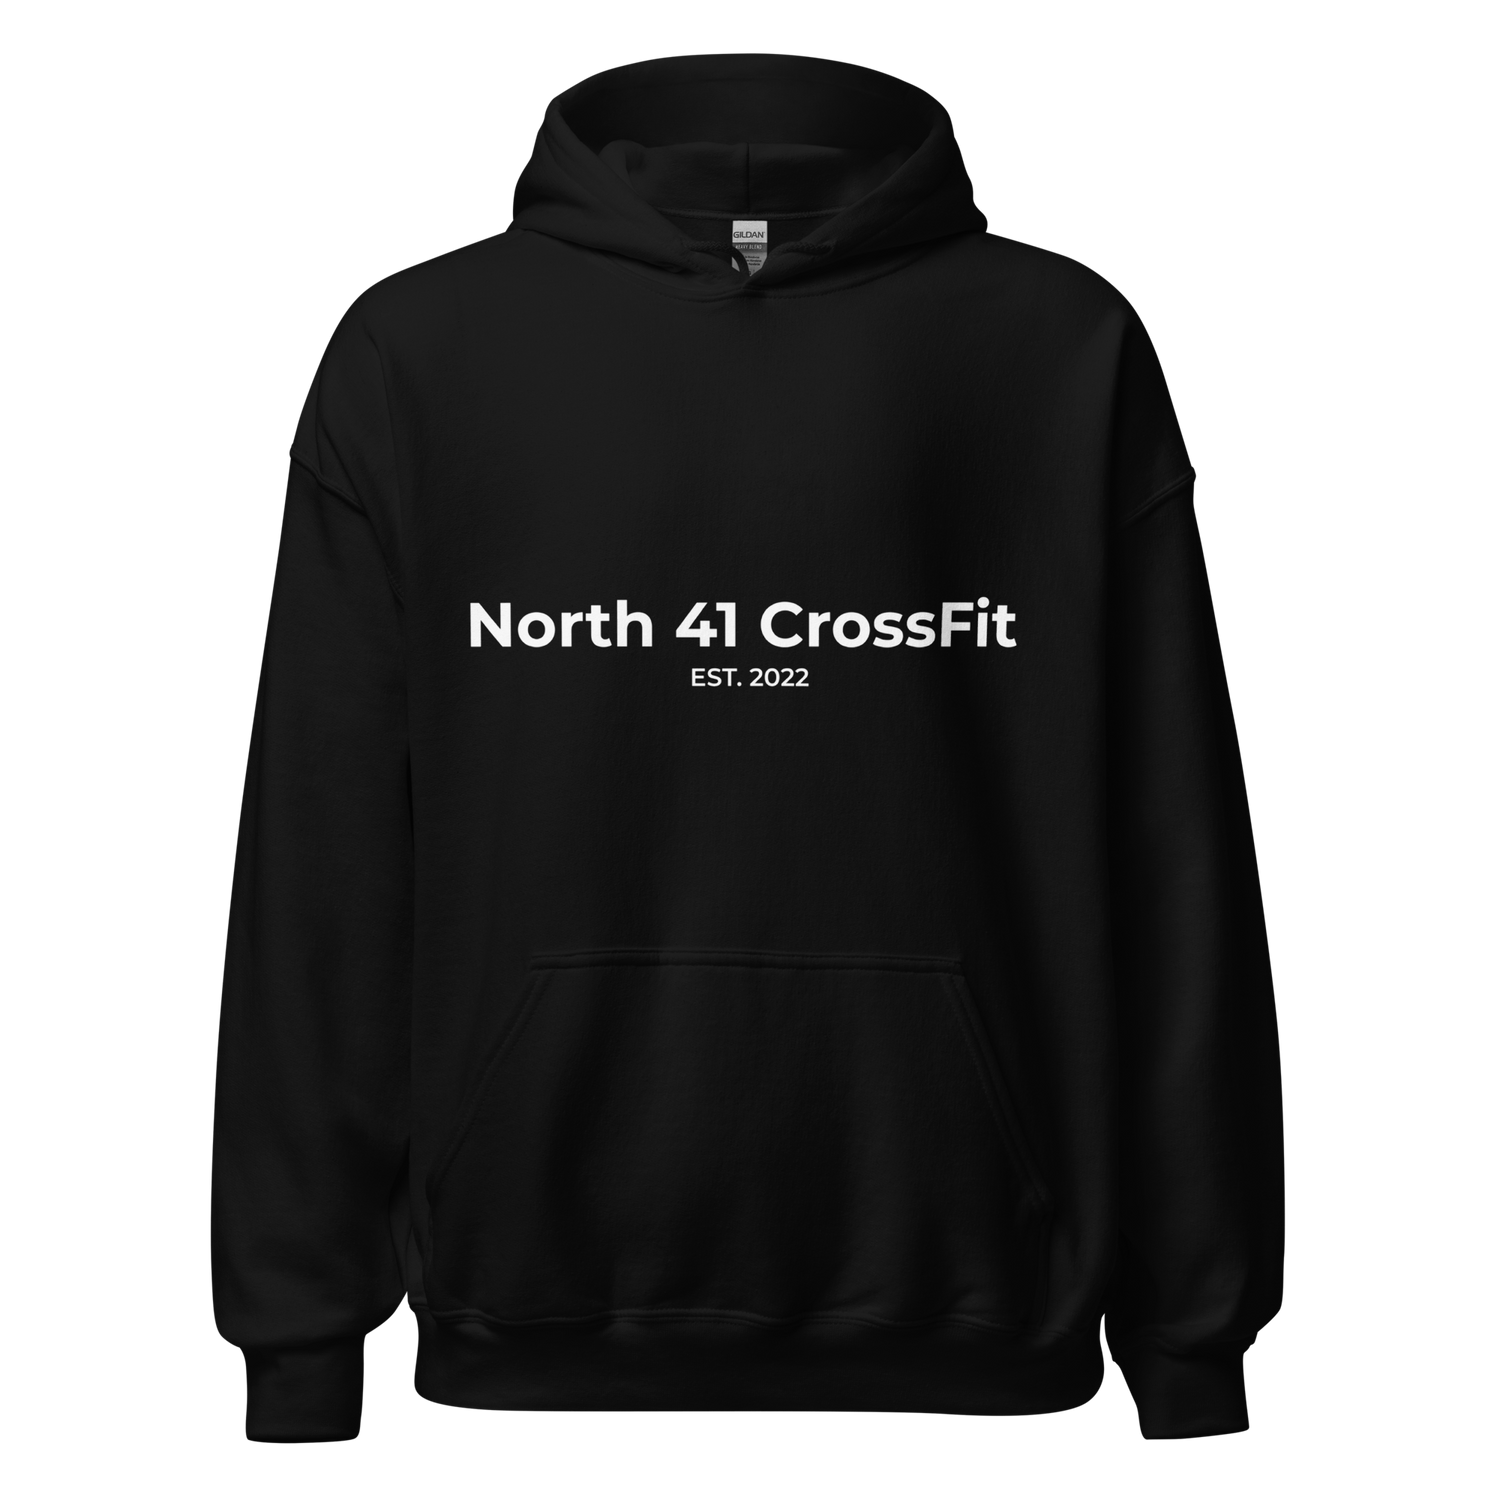 North 41 CrossFit